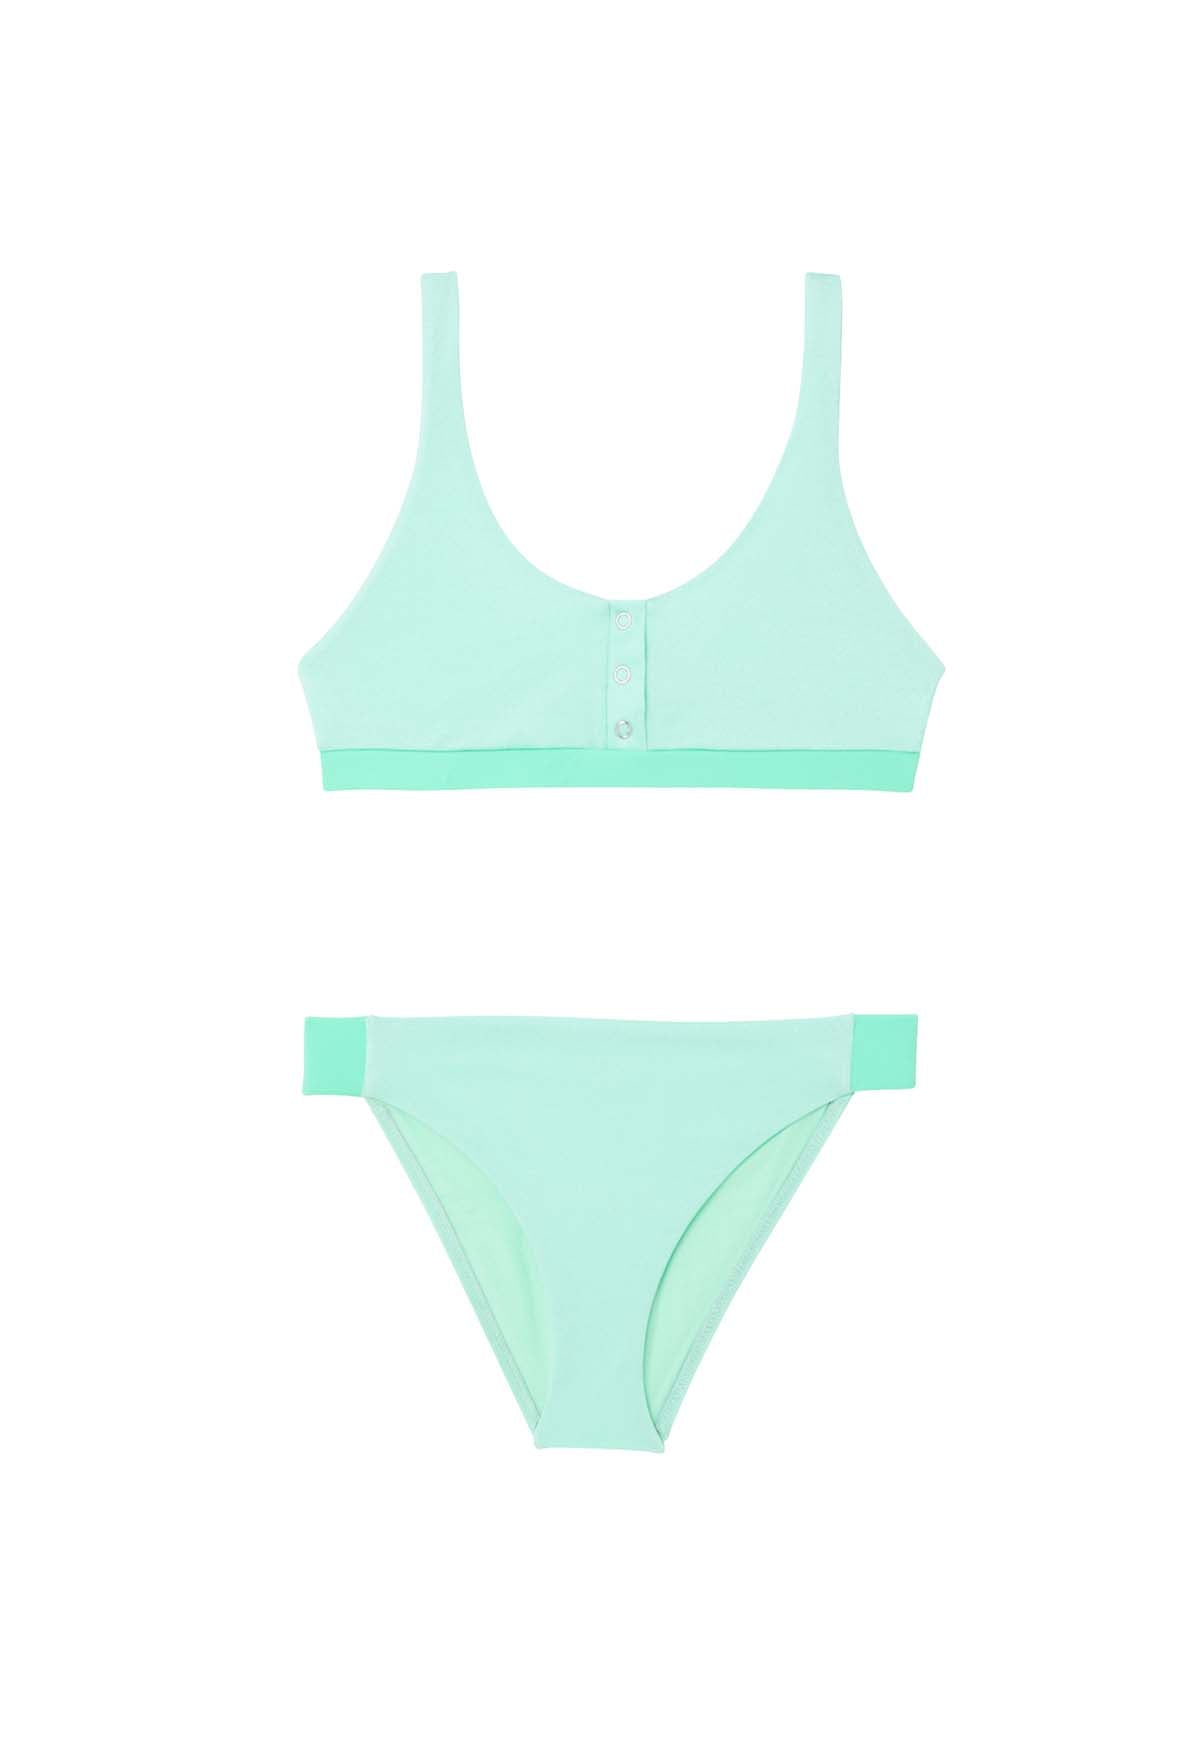 Op Girls SwimSuit Bikini Set Swimwear XL 14-16 Fish Blue UPF 50+